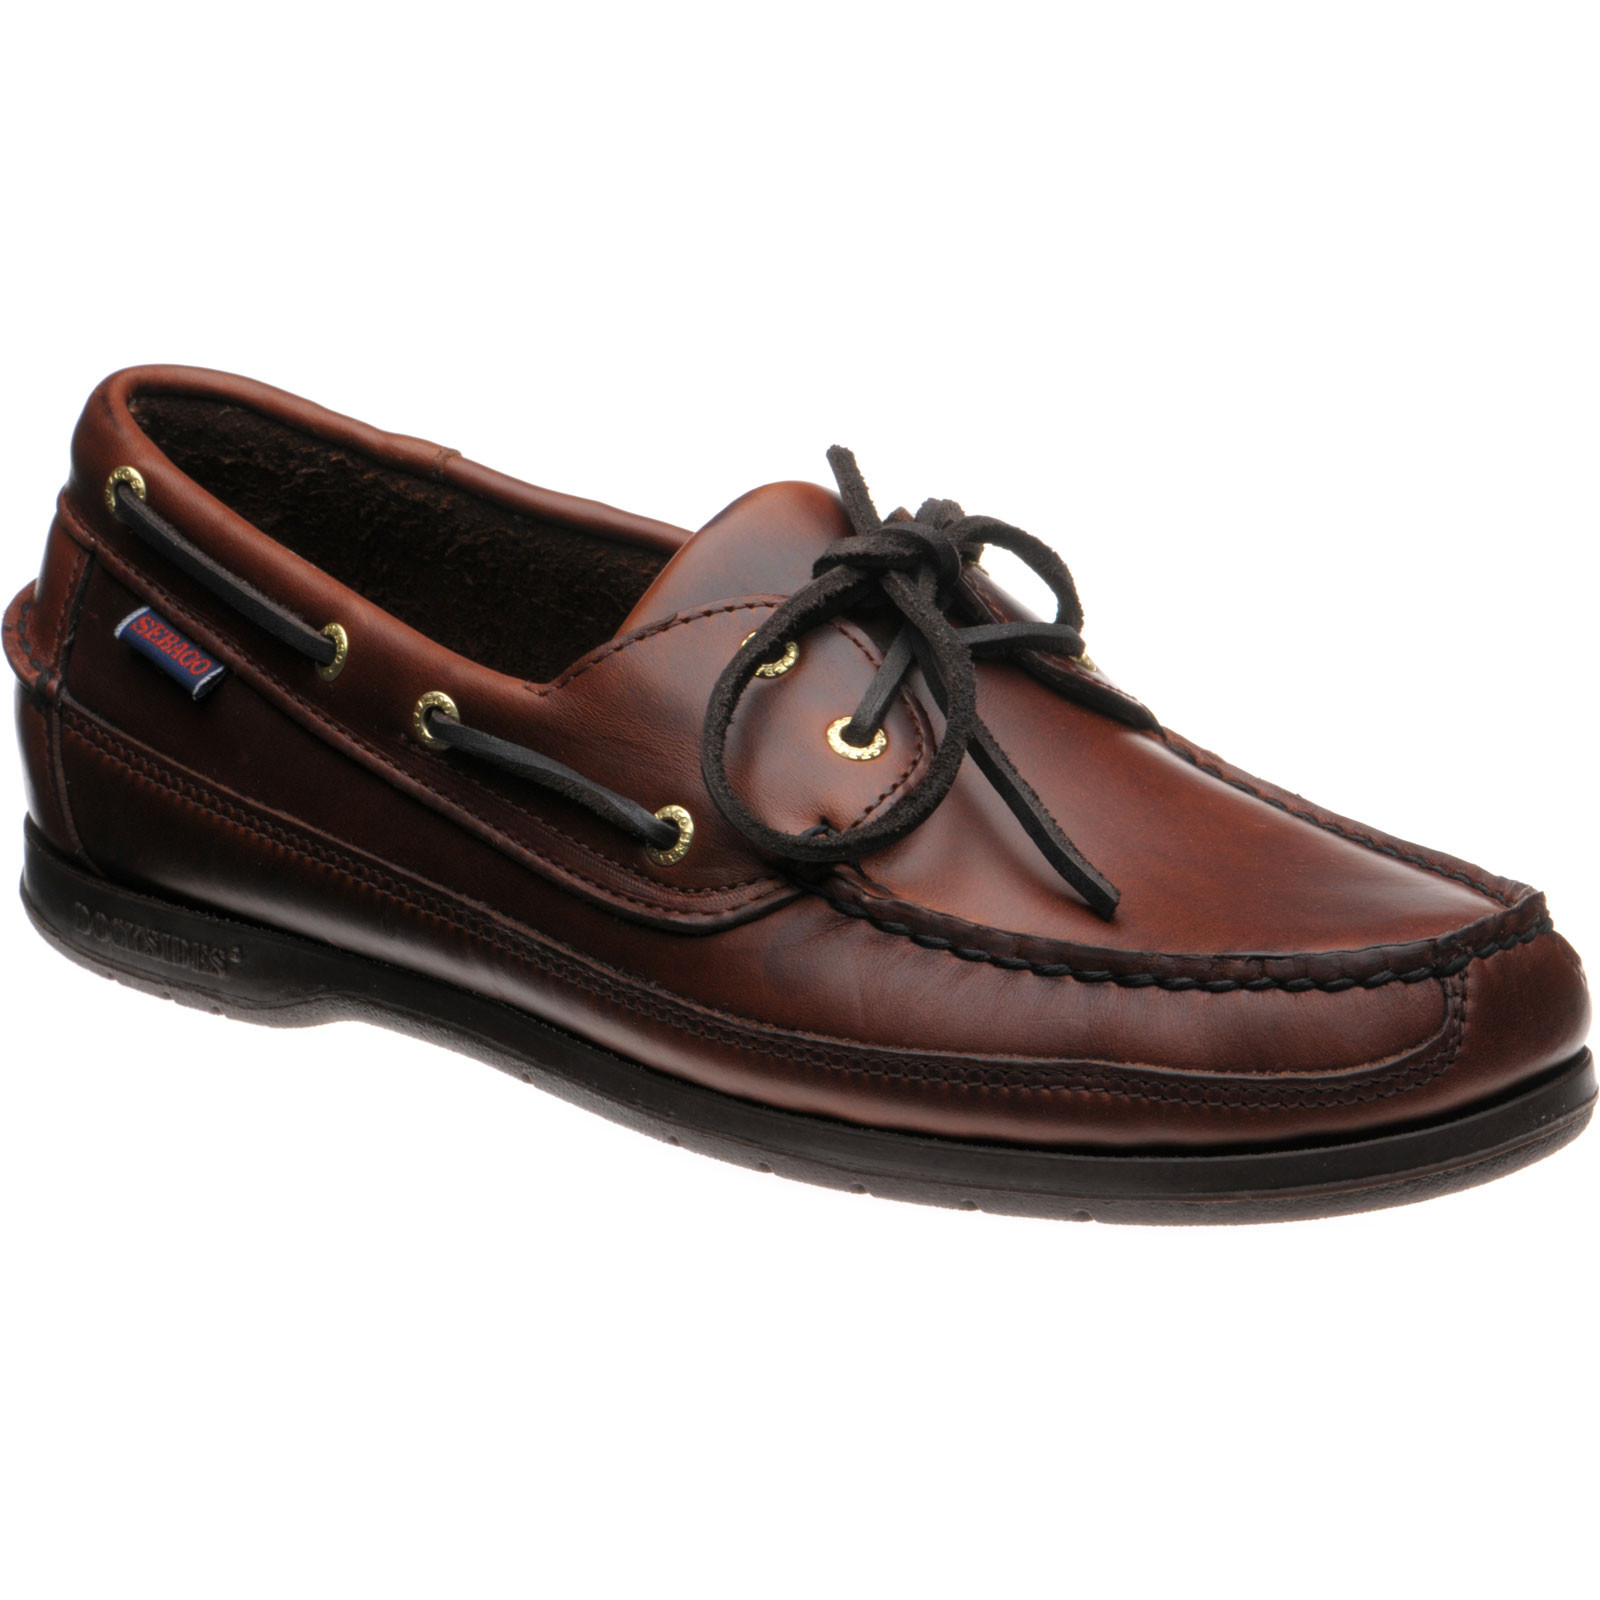 Sebago shoes | Sebago | Schooner in Brown at Herring Shoes